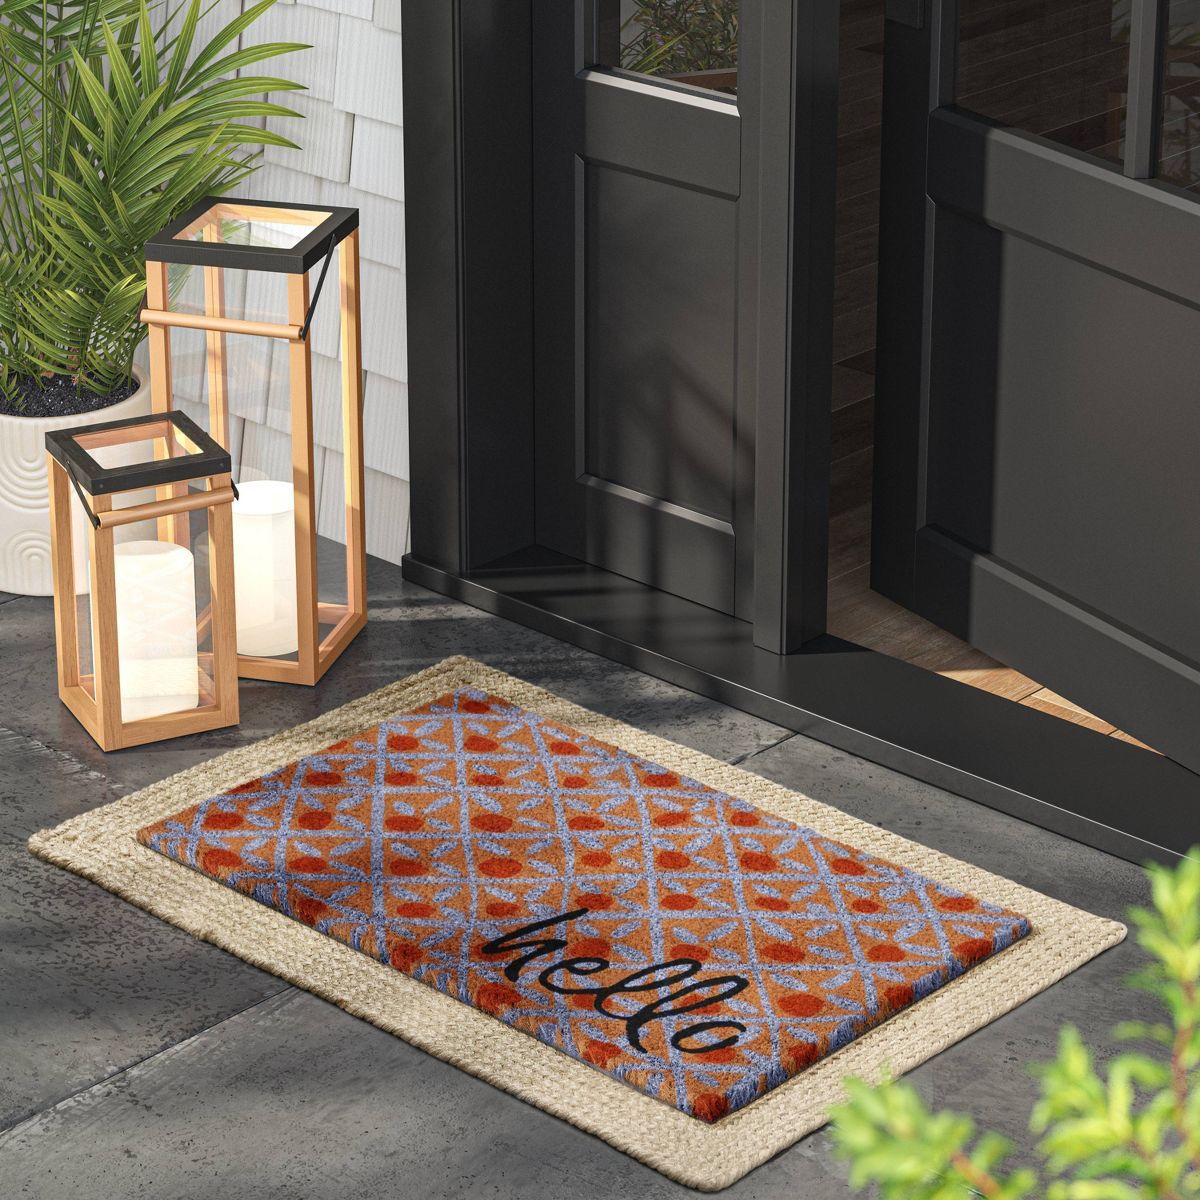 1'6"x2'6" 'Hello' Tile Doormat Natural/Blue - Threshold™ | Target